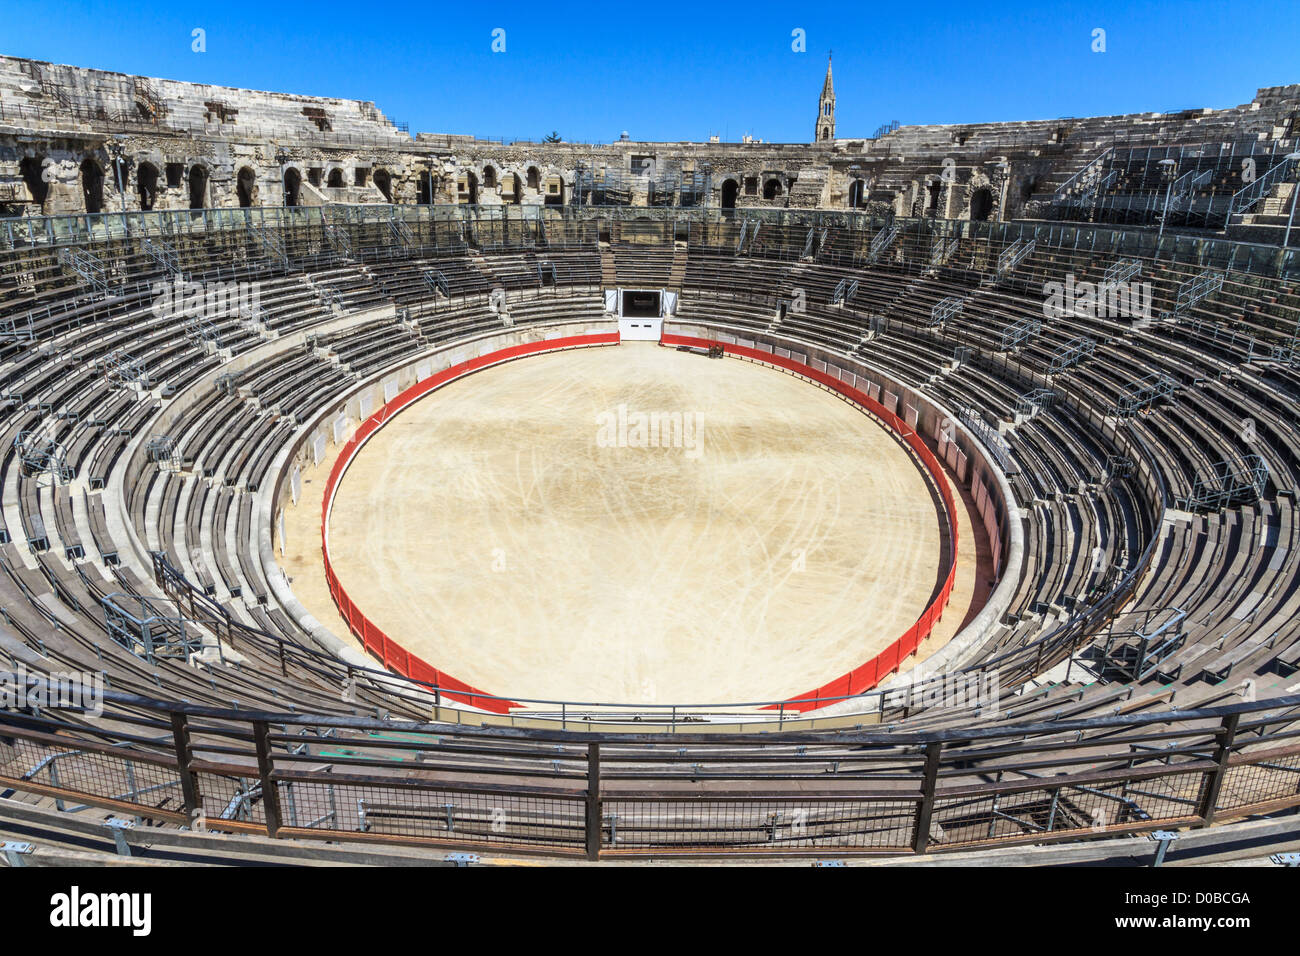 Bull Fighting Arena Nimes (Roman Amphitheater), France Stock Photo